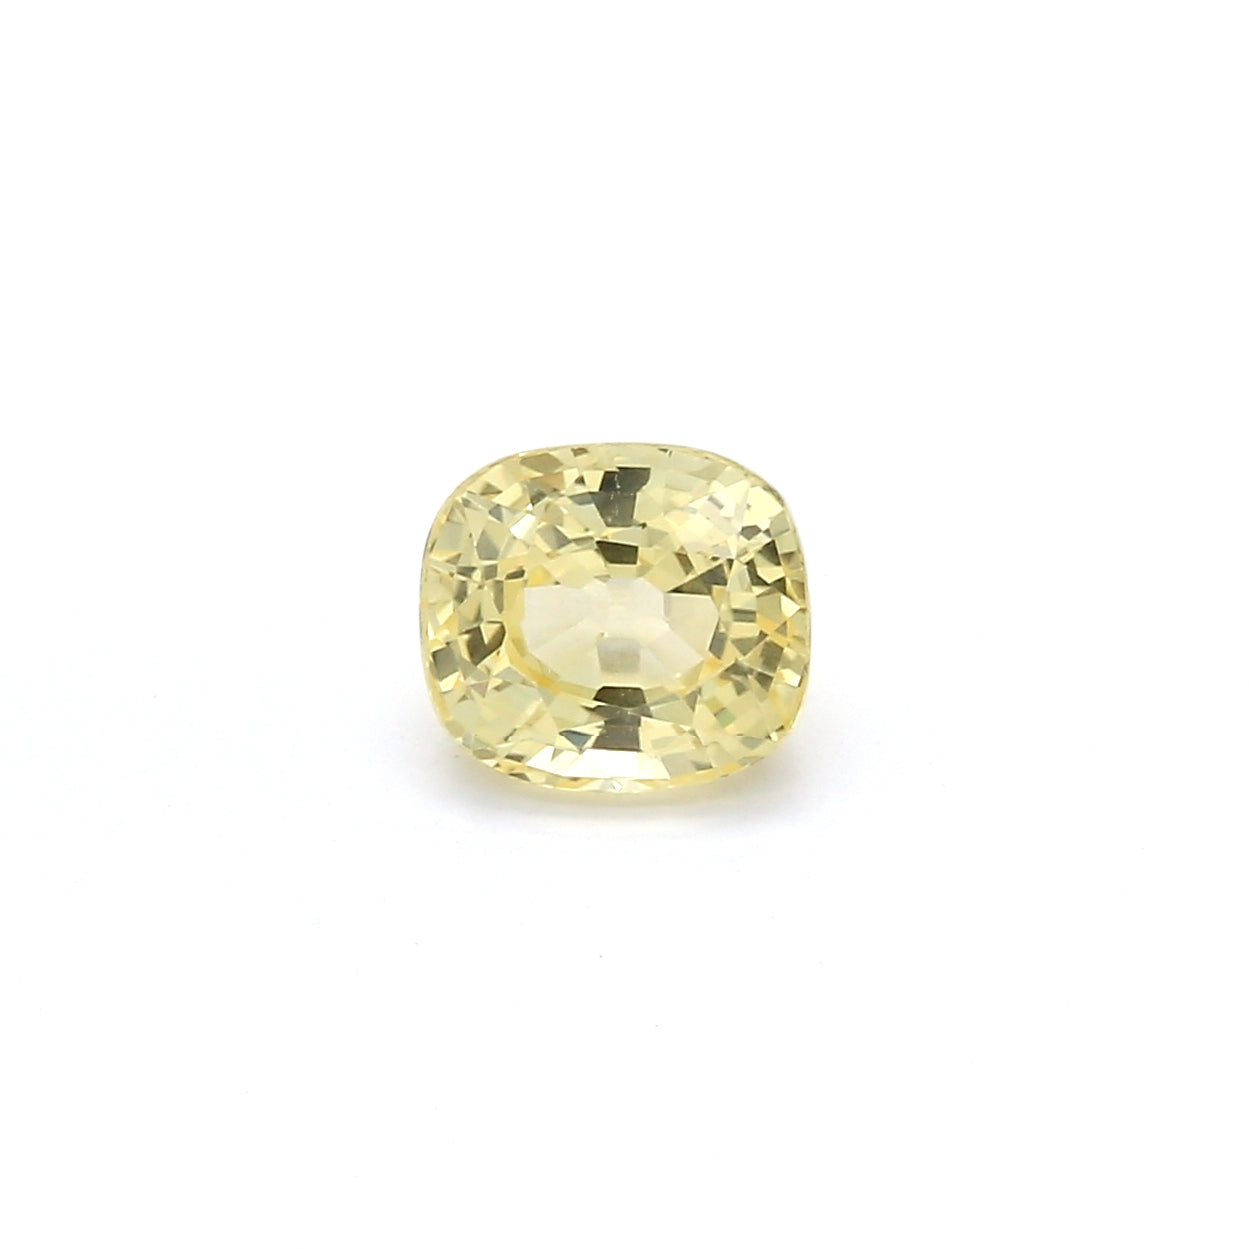 1.71ct Yellow, Cushion Sapphire, Heated, Sri Lanka - 6.80 x 6.15 x 4.30mm